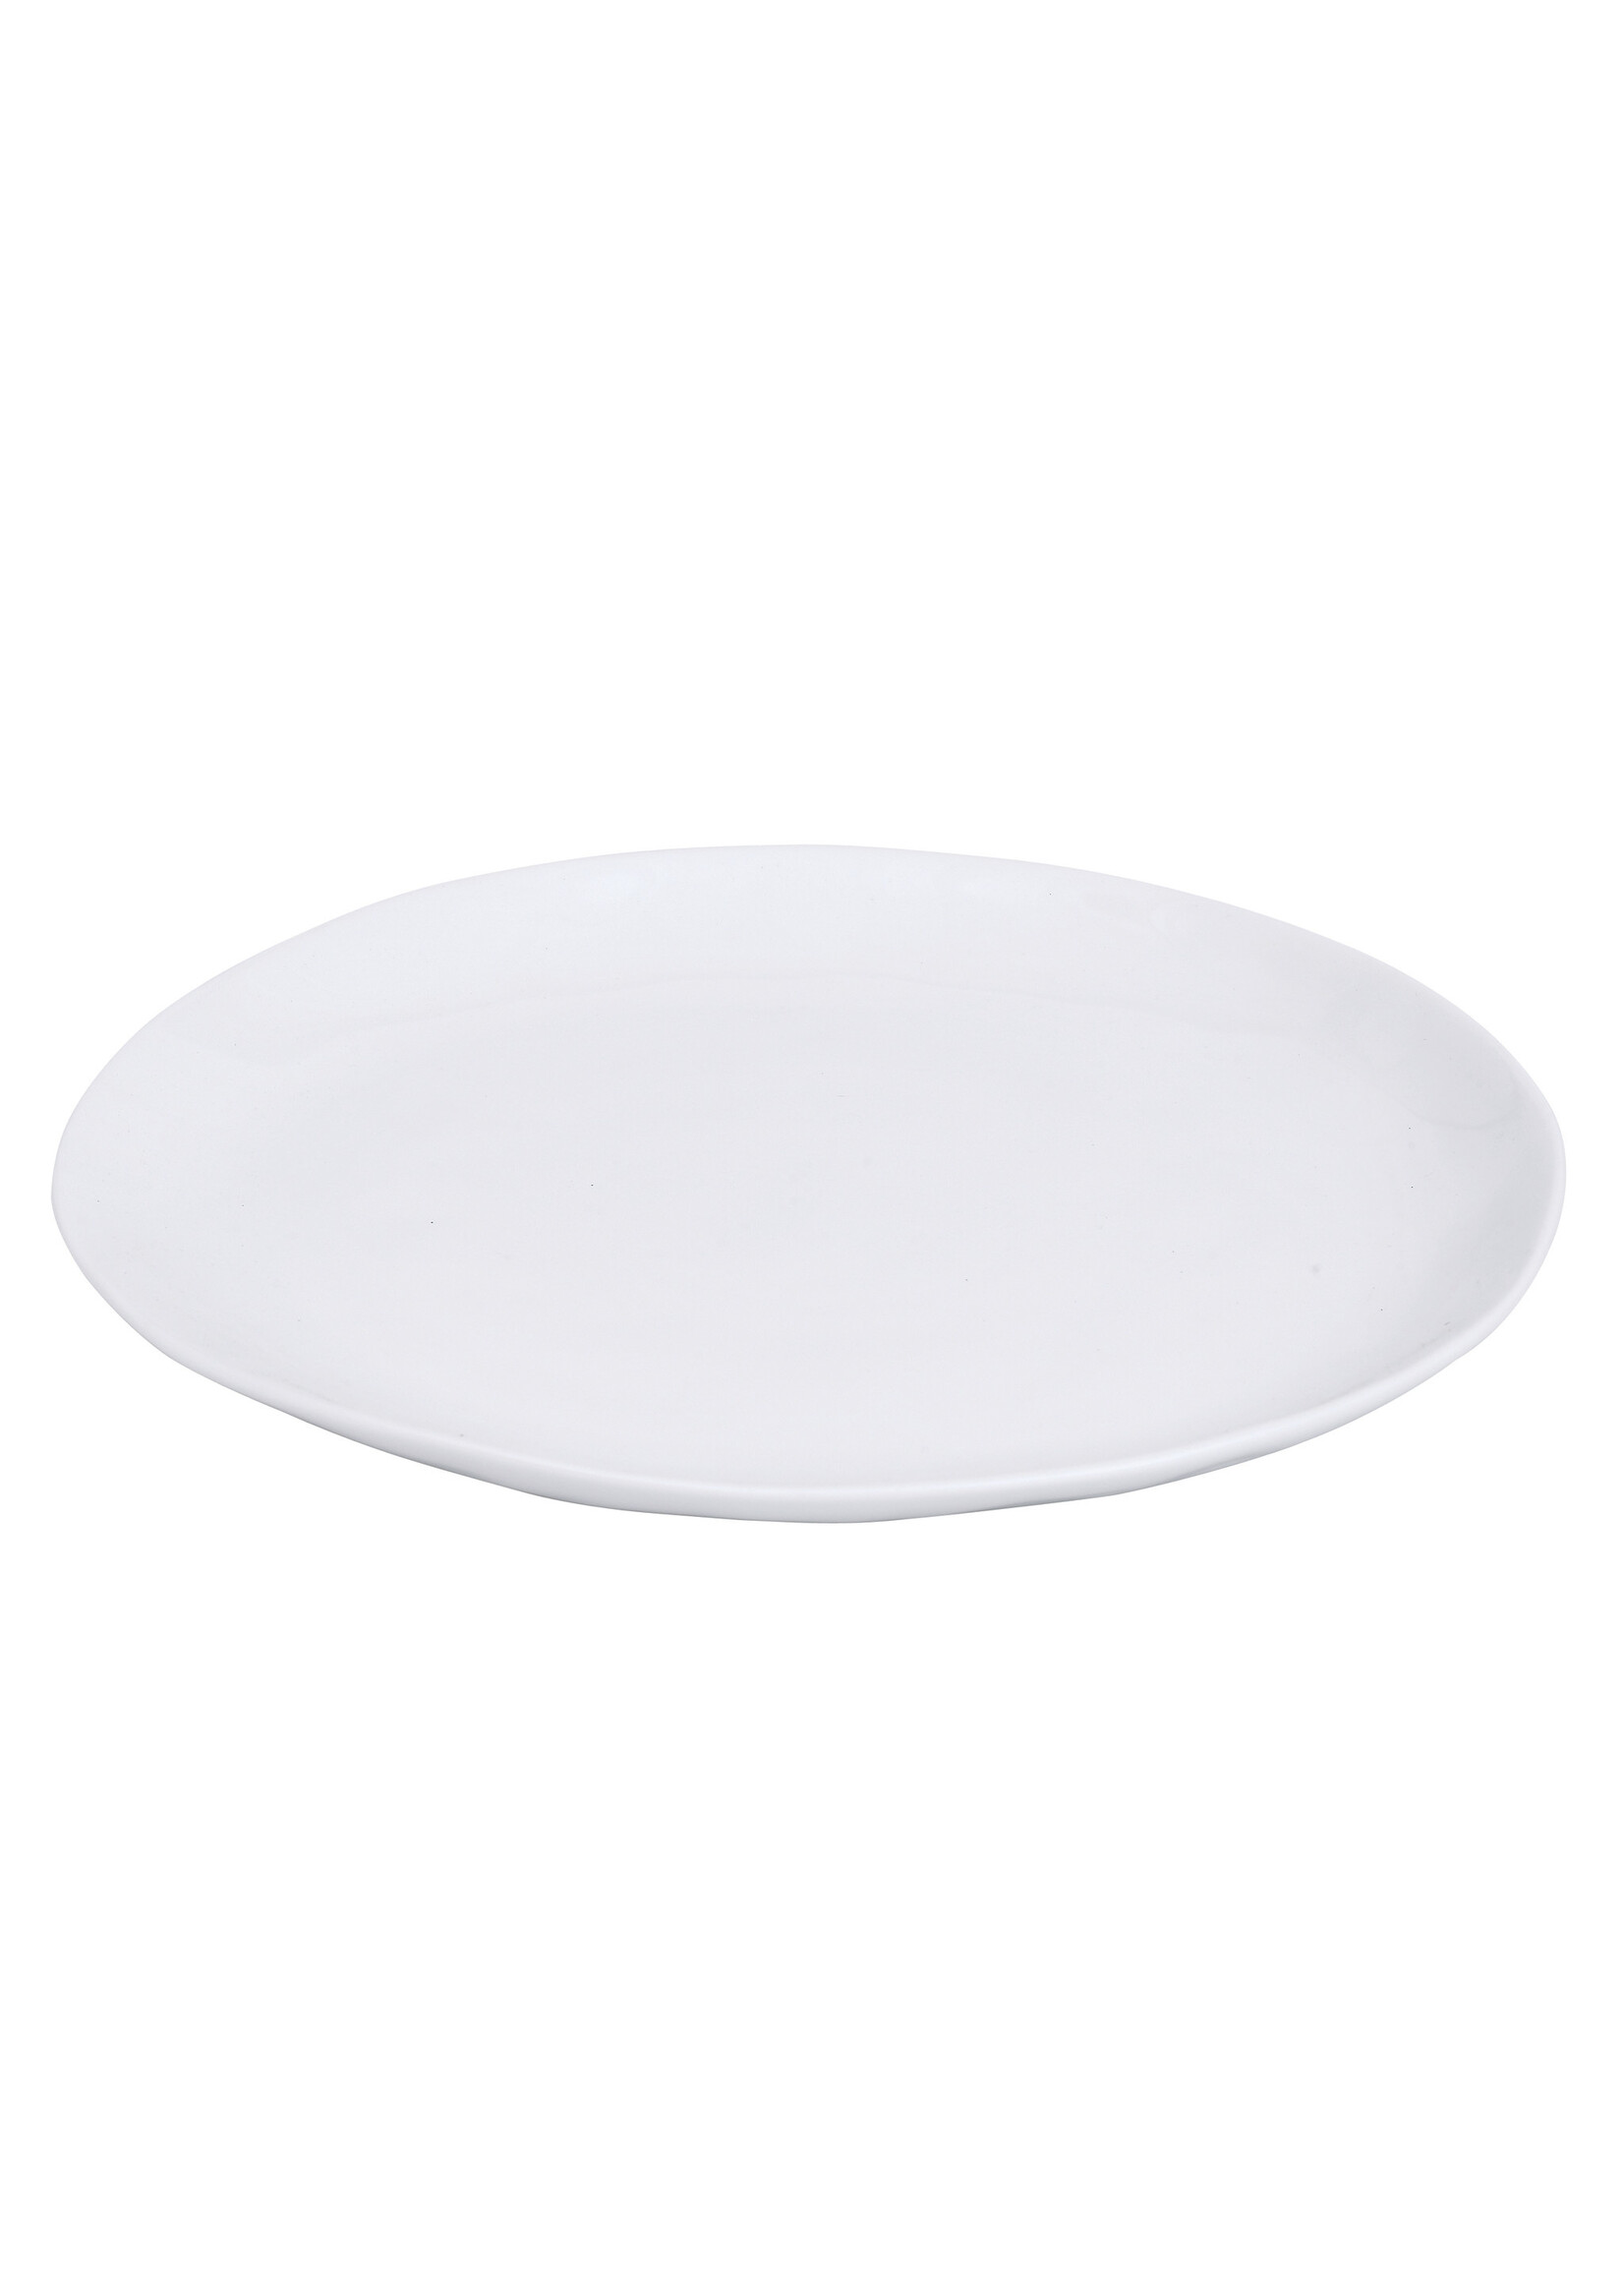 Pomax Porcelino Ovale Assiette Plate 28 cm